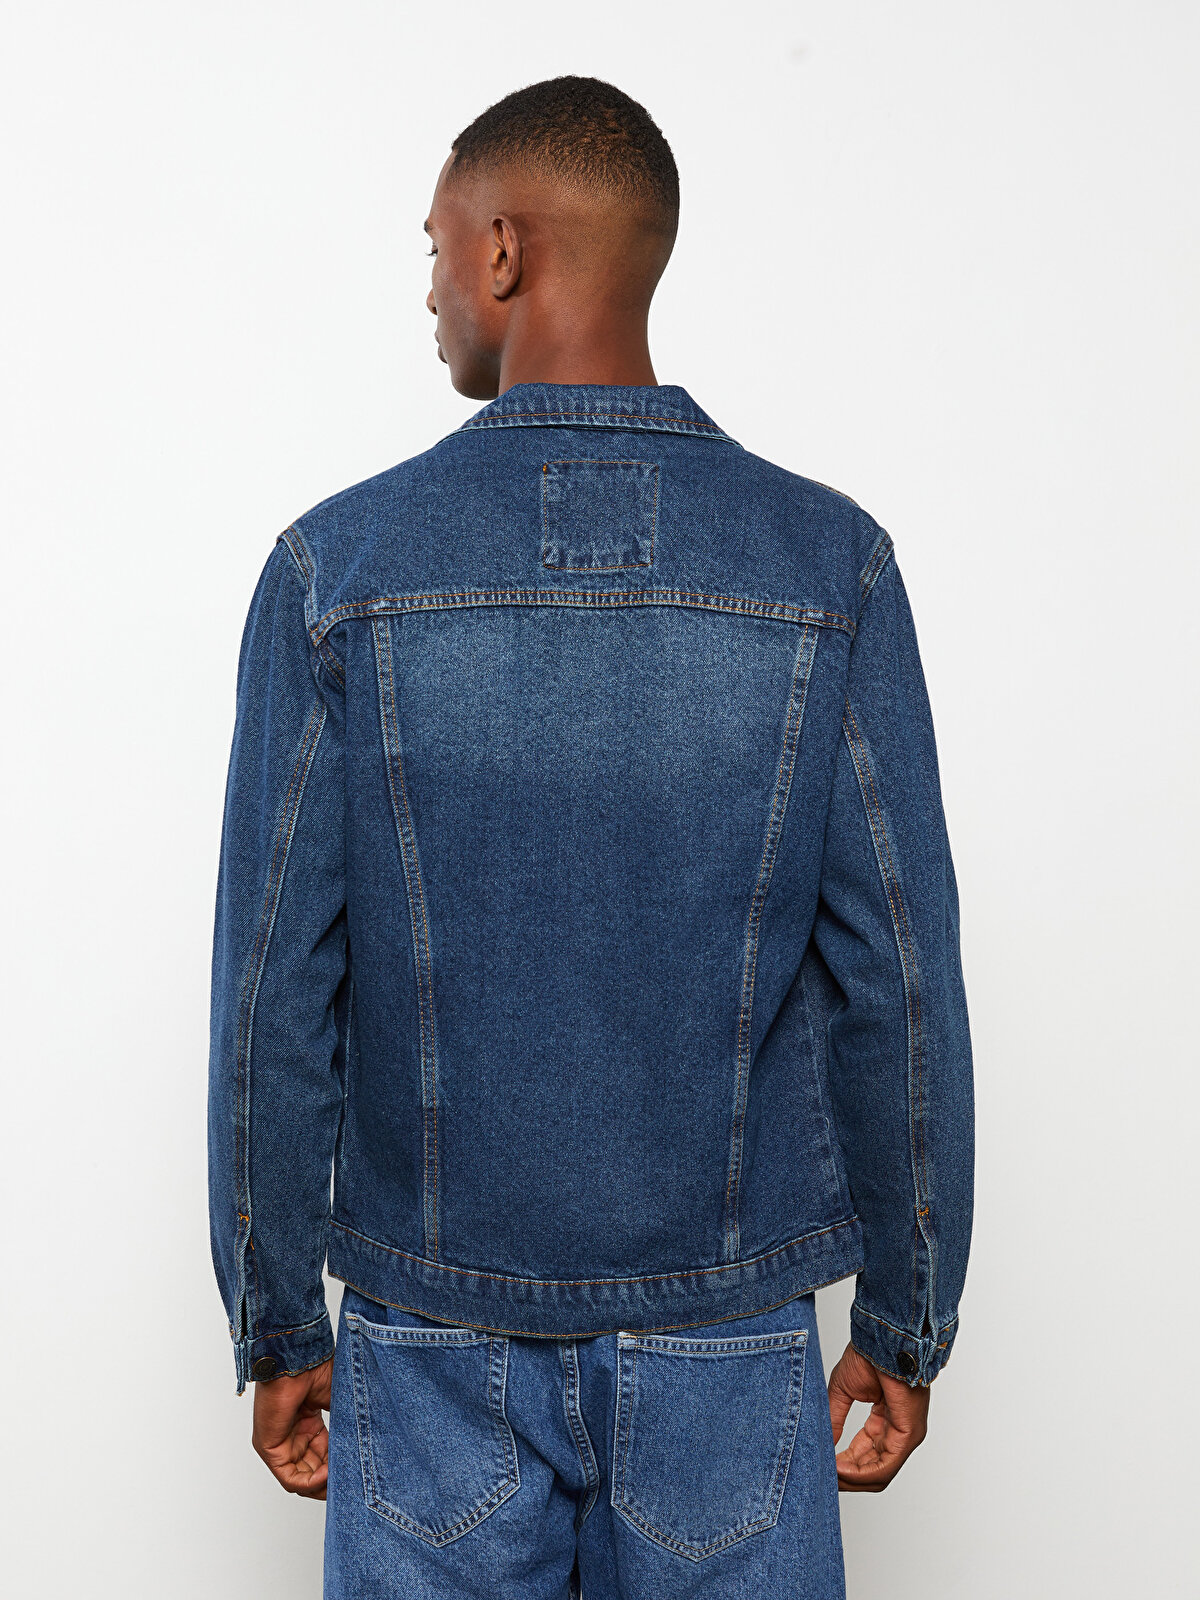 Lee Cooper Men's Jeans Denim Jacket, New Hip Hop Era Star G, Time Money Is  Coat | eBay